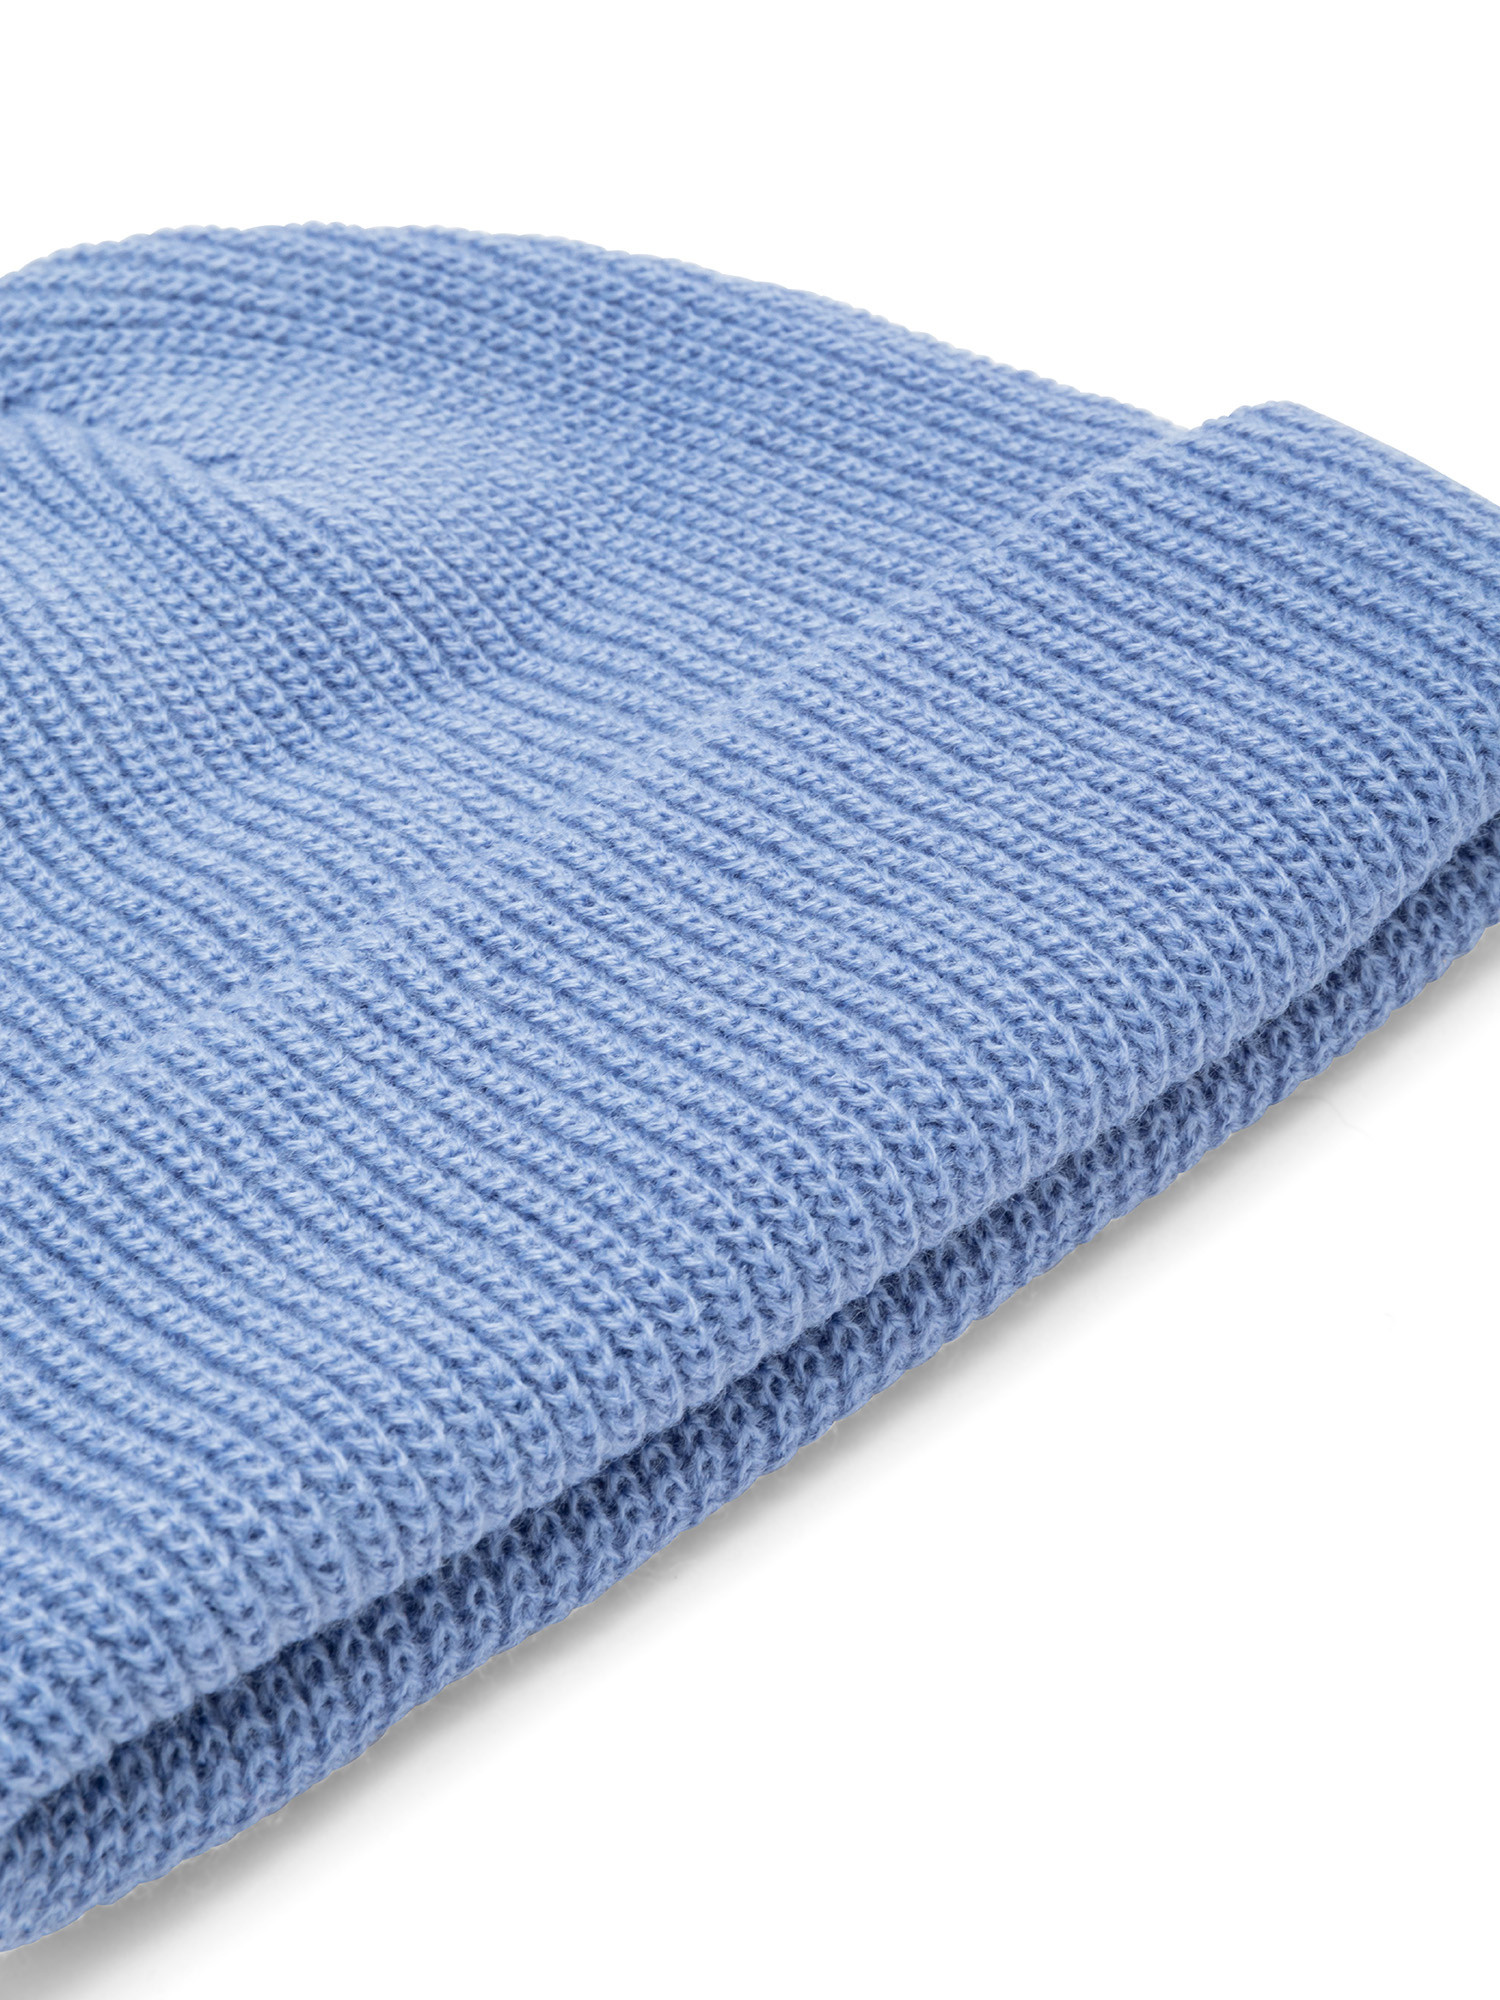 Koan - Ribbed cap, Light Blue, large image number 1